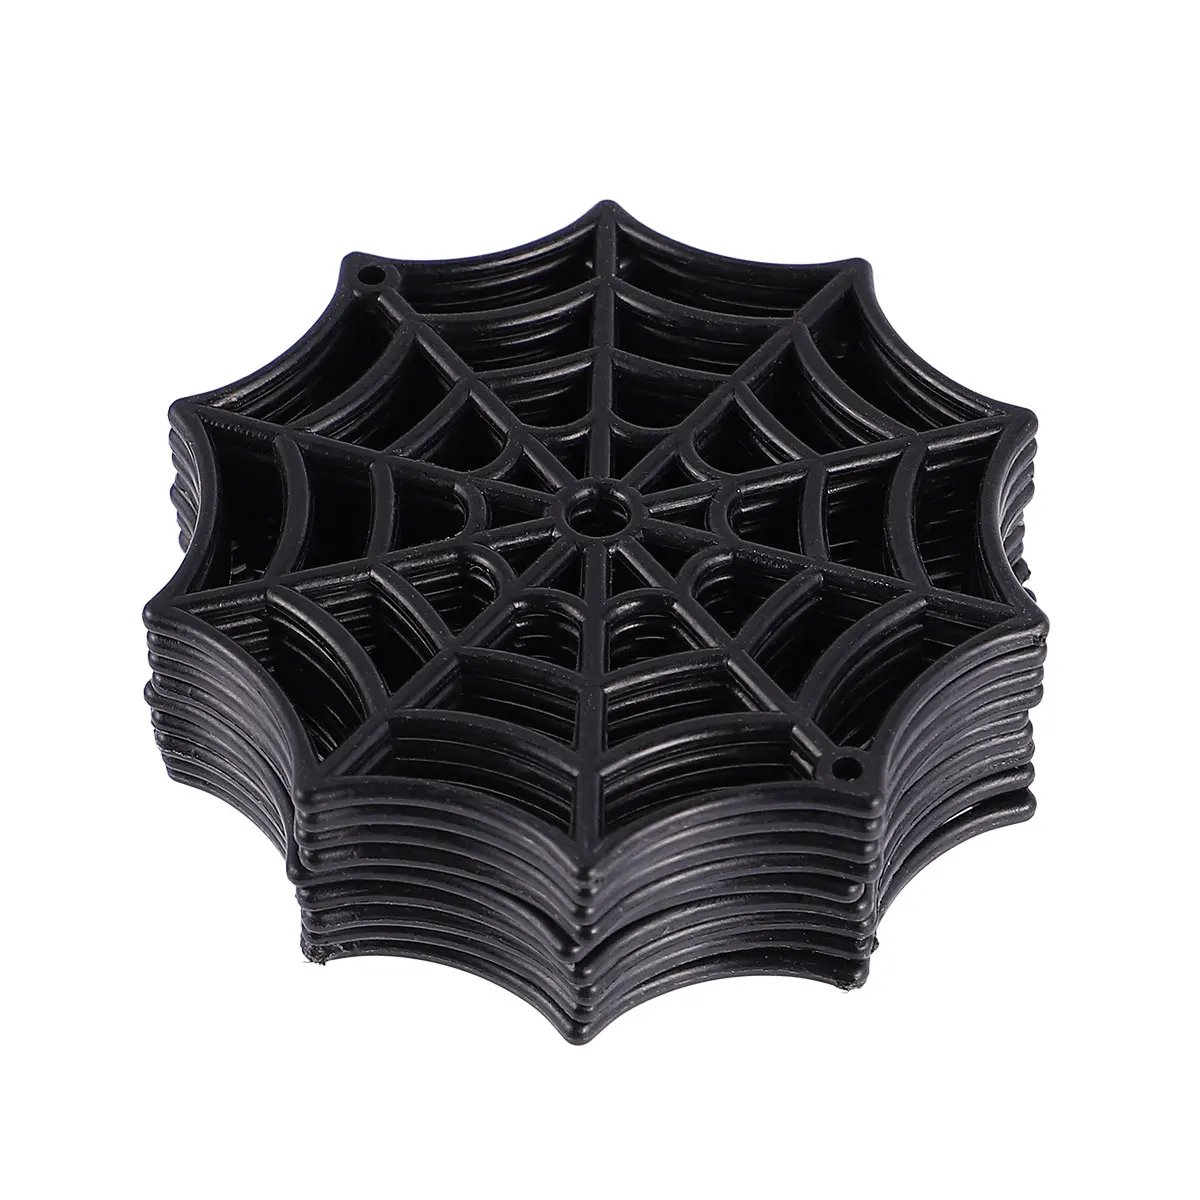 VOSAREA 50pcs Plastic Spider Web Halloween Cobweb for Halloween Party Outdoor Yard Decor 